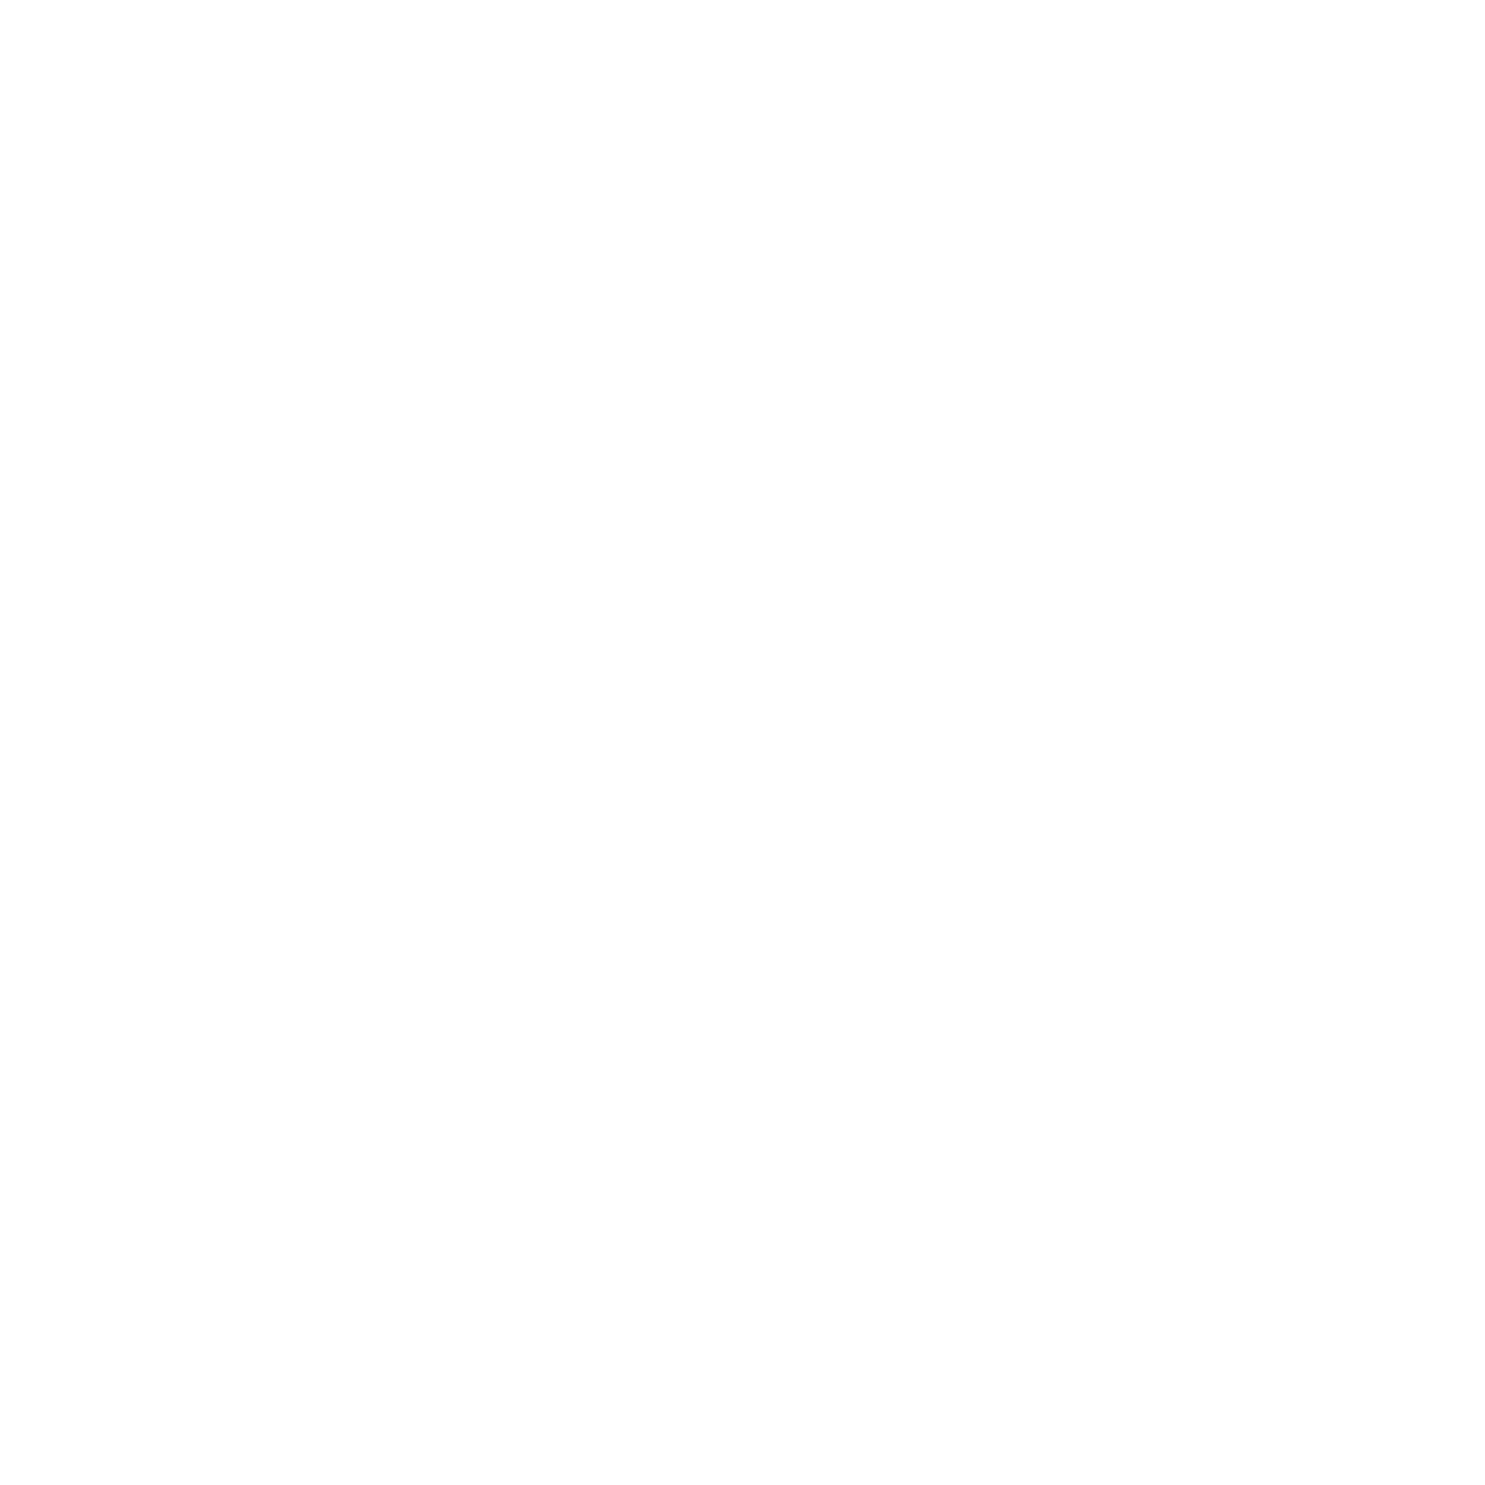 LazCult